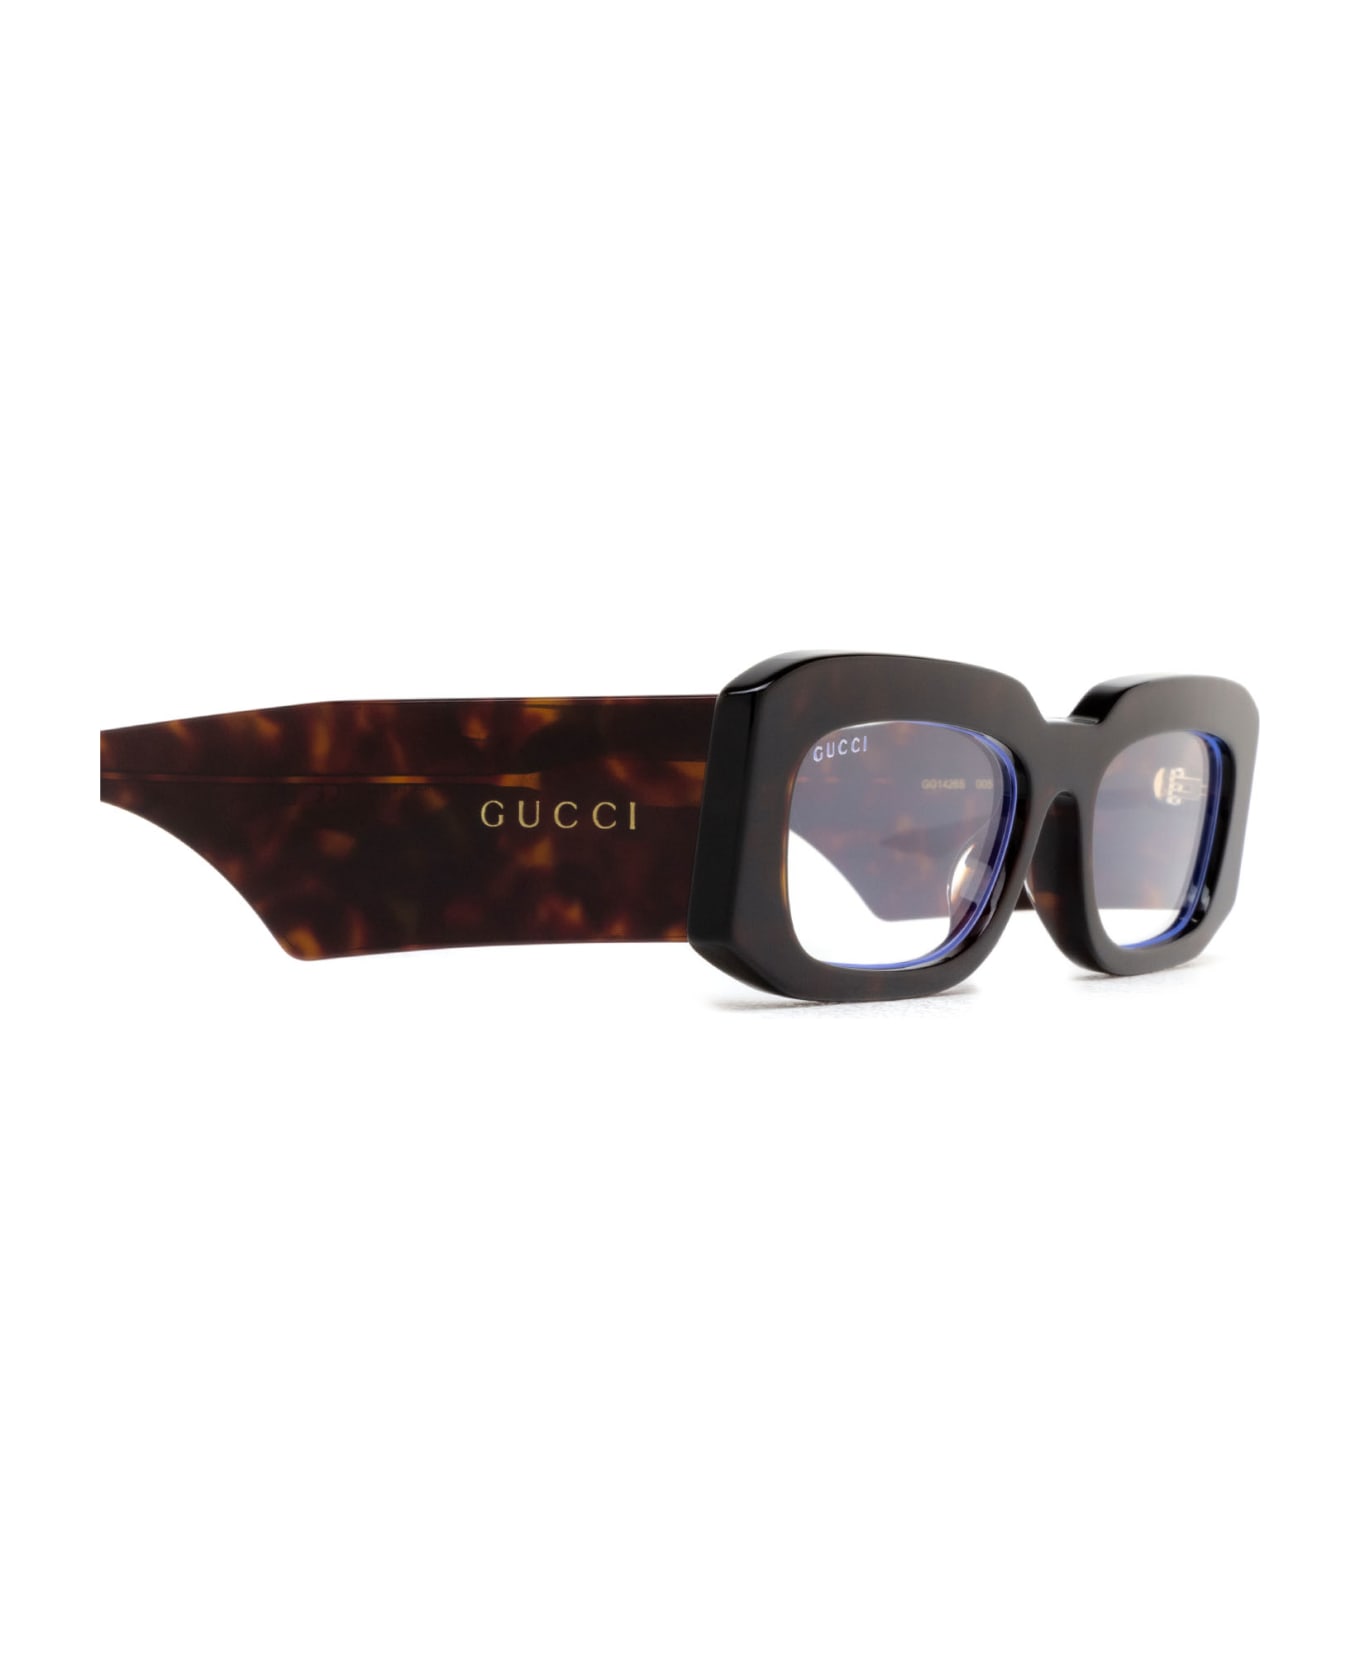 Gucci Eyewear Gg1426s Havana Sunglasses - Havana